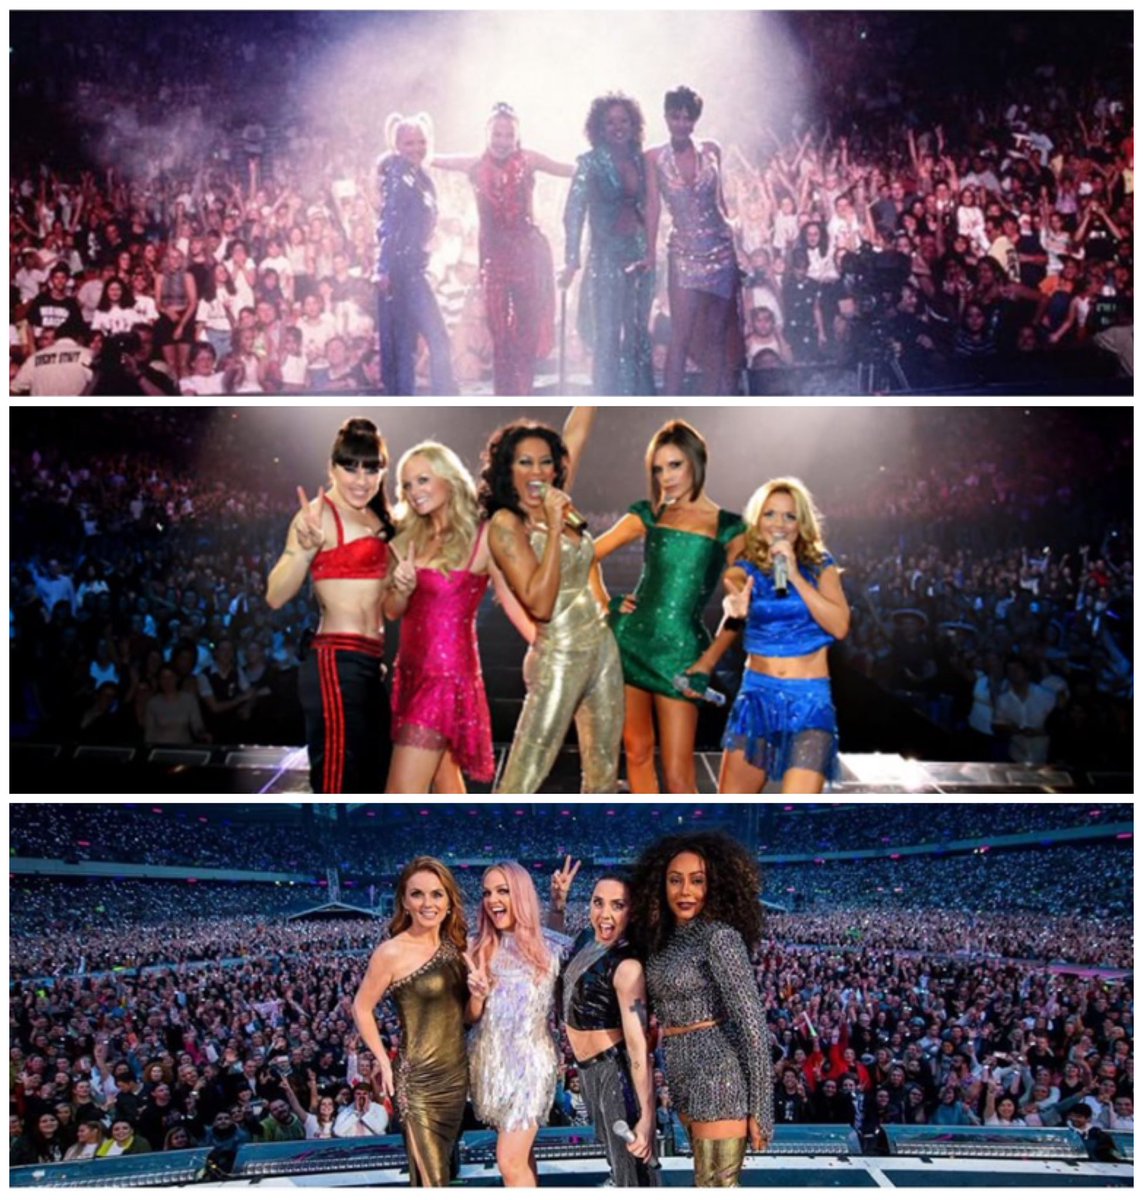 Icons! 1998, 2007, 2019 ✌🏻🇬🇧✌🏻 #SpiceWorld2019 23 Years of Spice Girls #ThroughTheYears #SpiceGirls #Iconic #90sChild @spicegirls @MelanieCmusic @OfficialMelB @EmmaBunton @GeriHalliwell @victoriabeckham